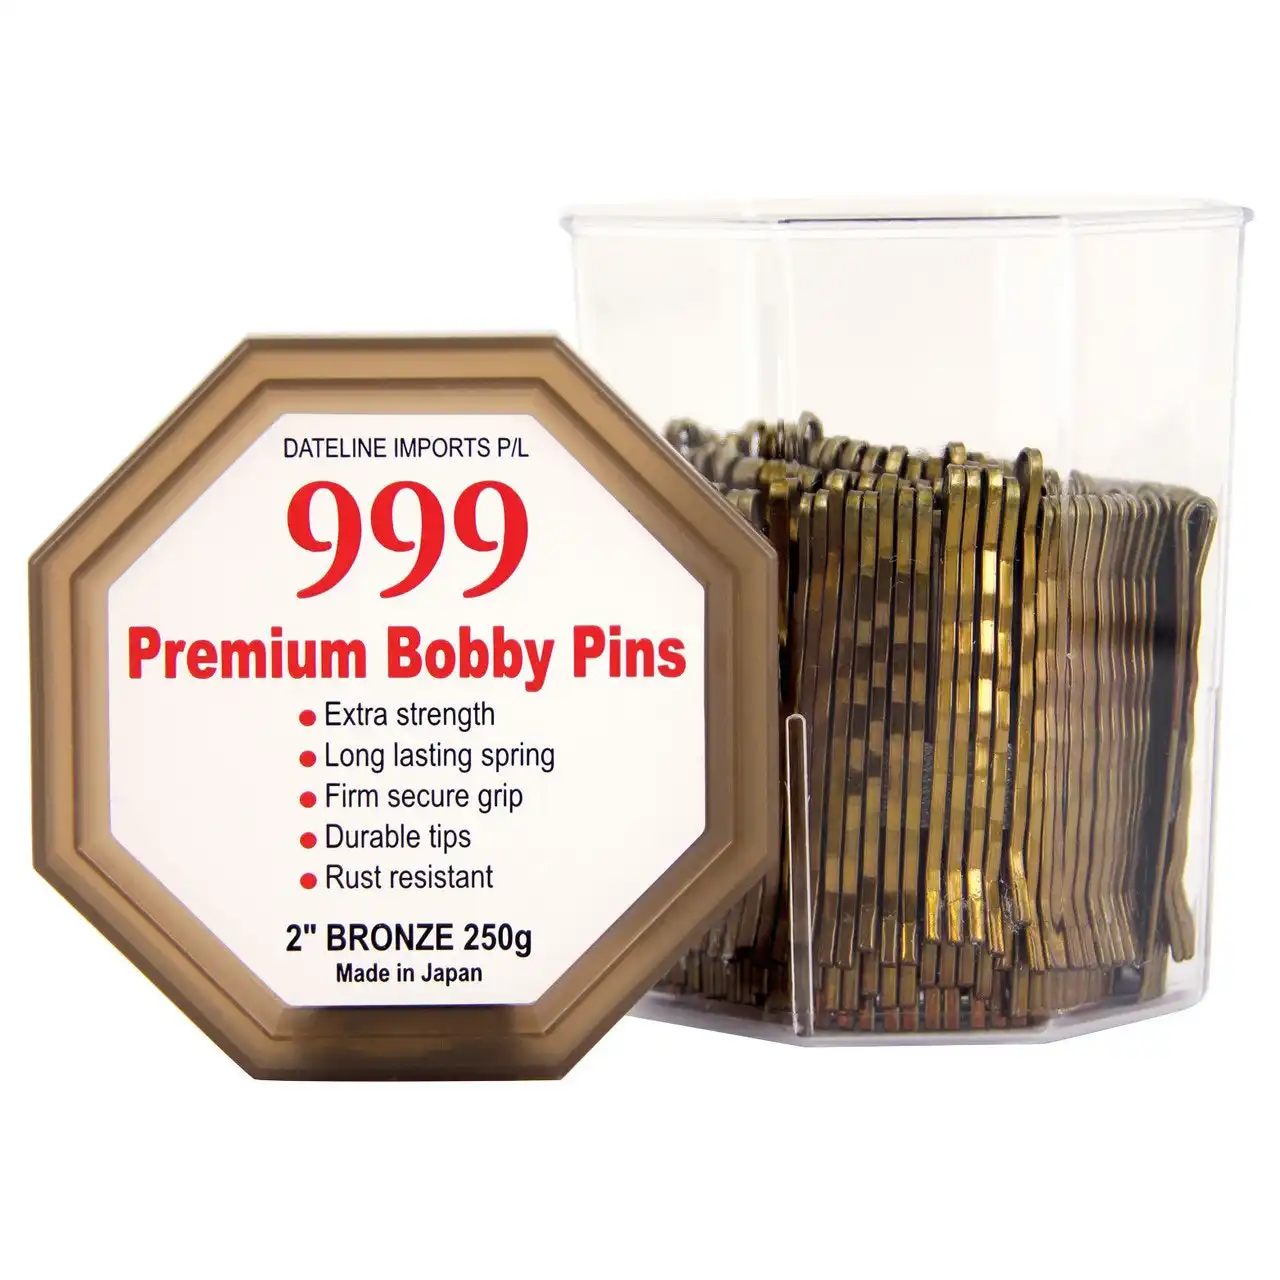 999 Bobby Pins Bronze 250g Tub